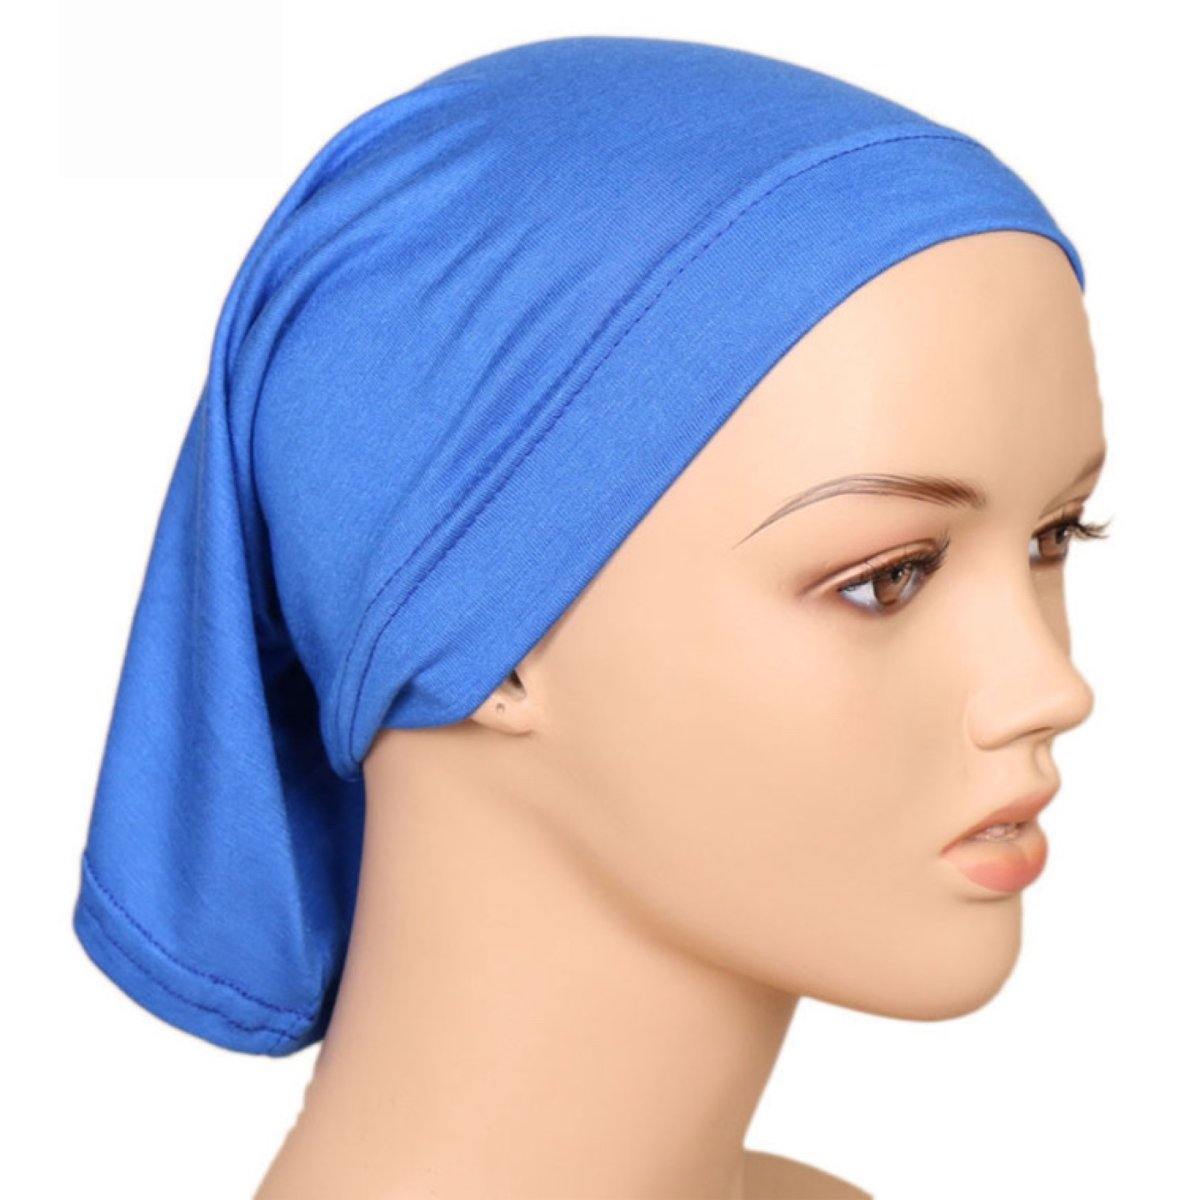 Lightweight Cotton Hijab Cap - UN Blue - Divinity Collection